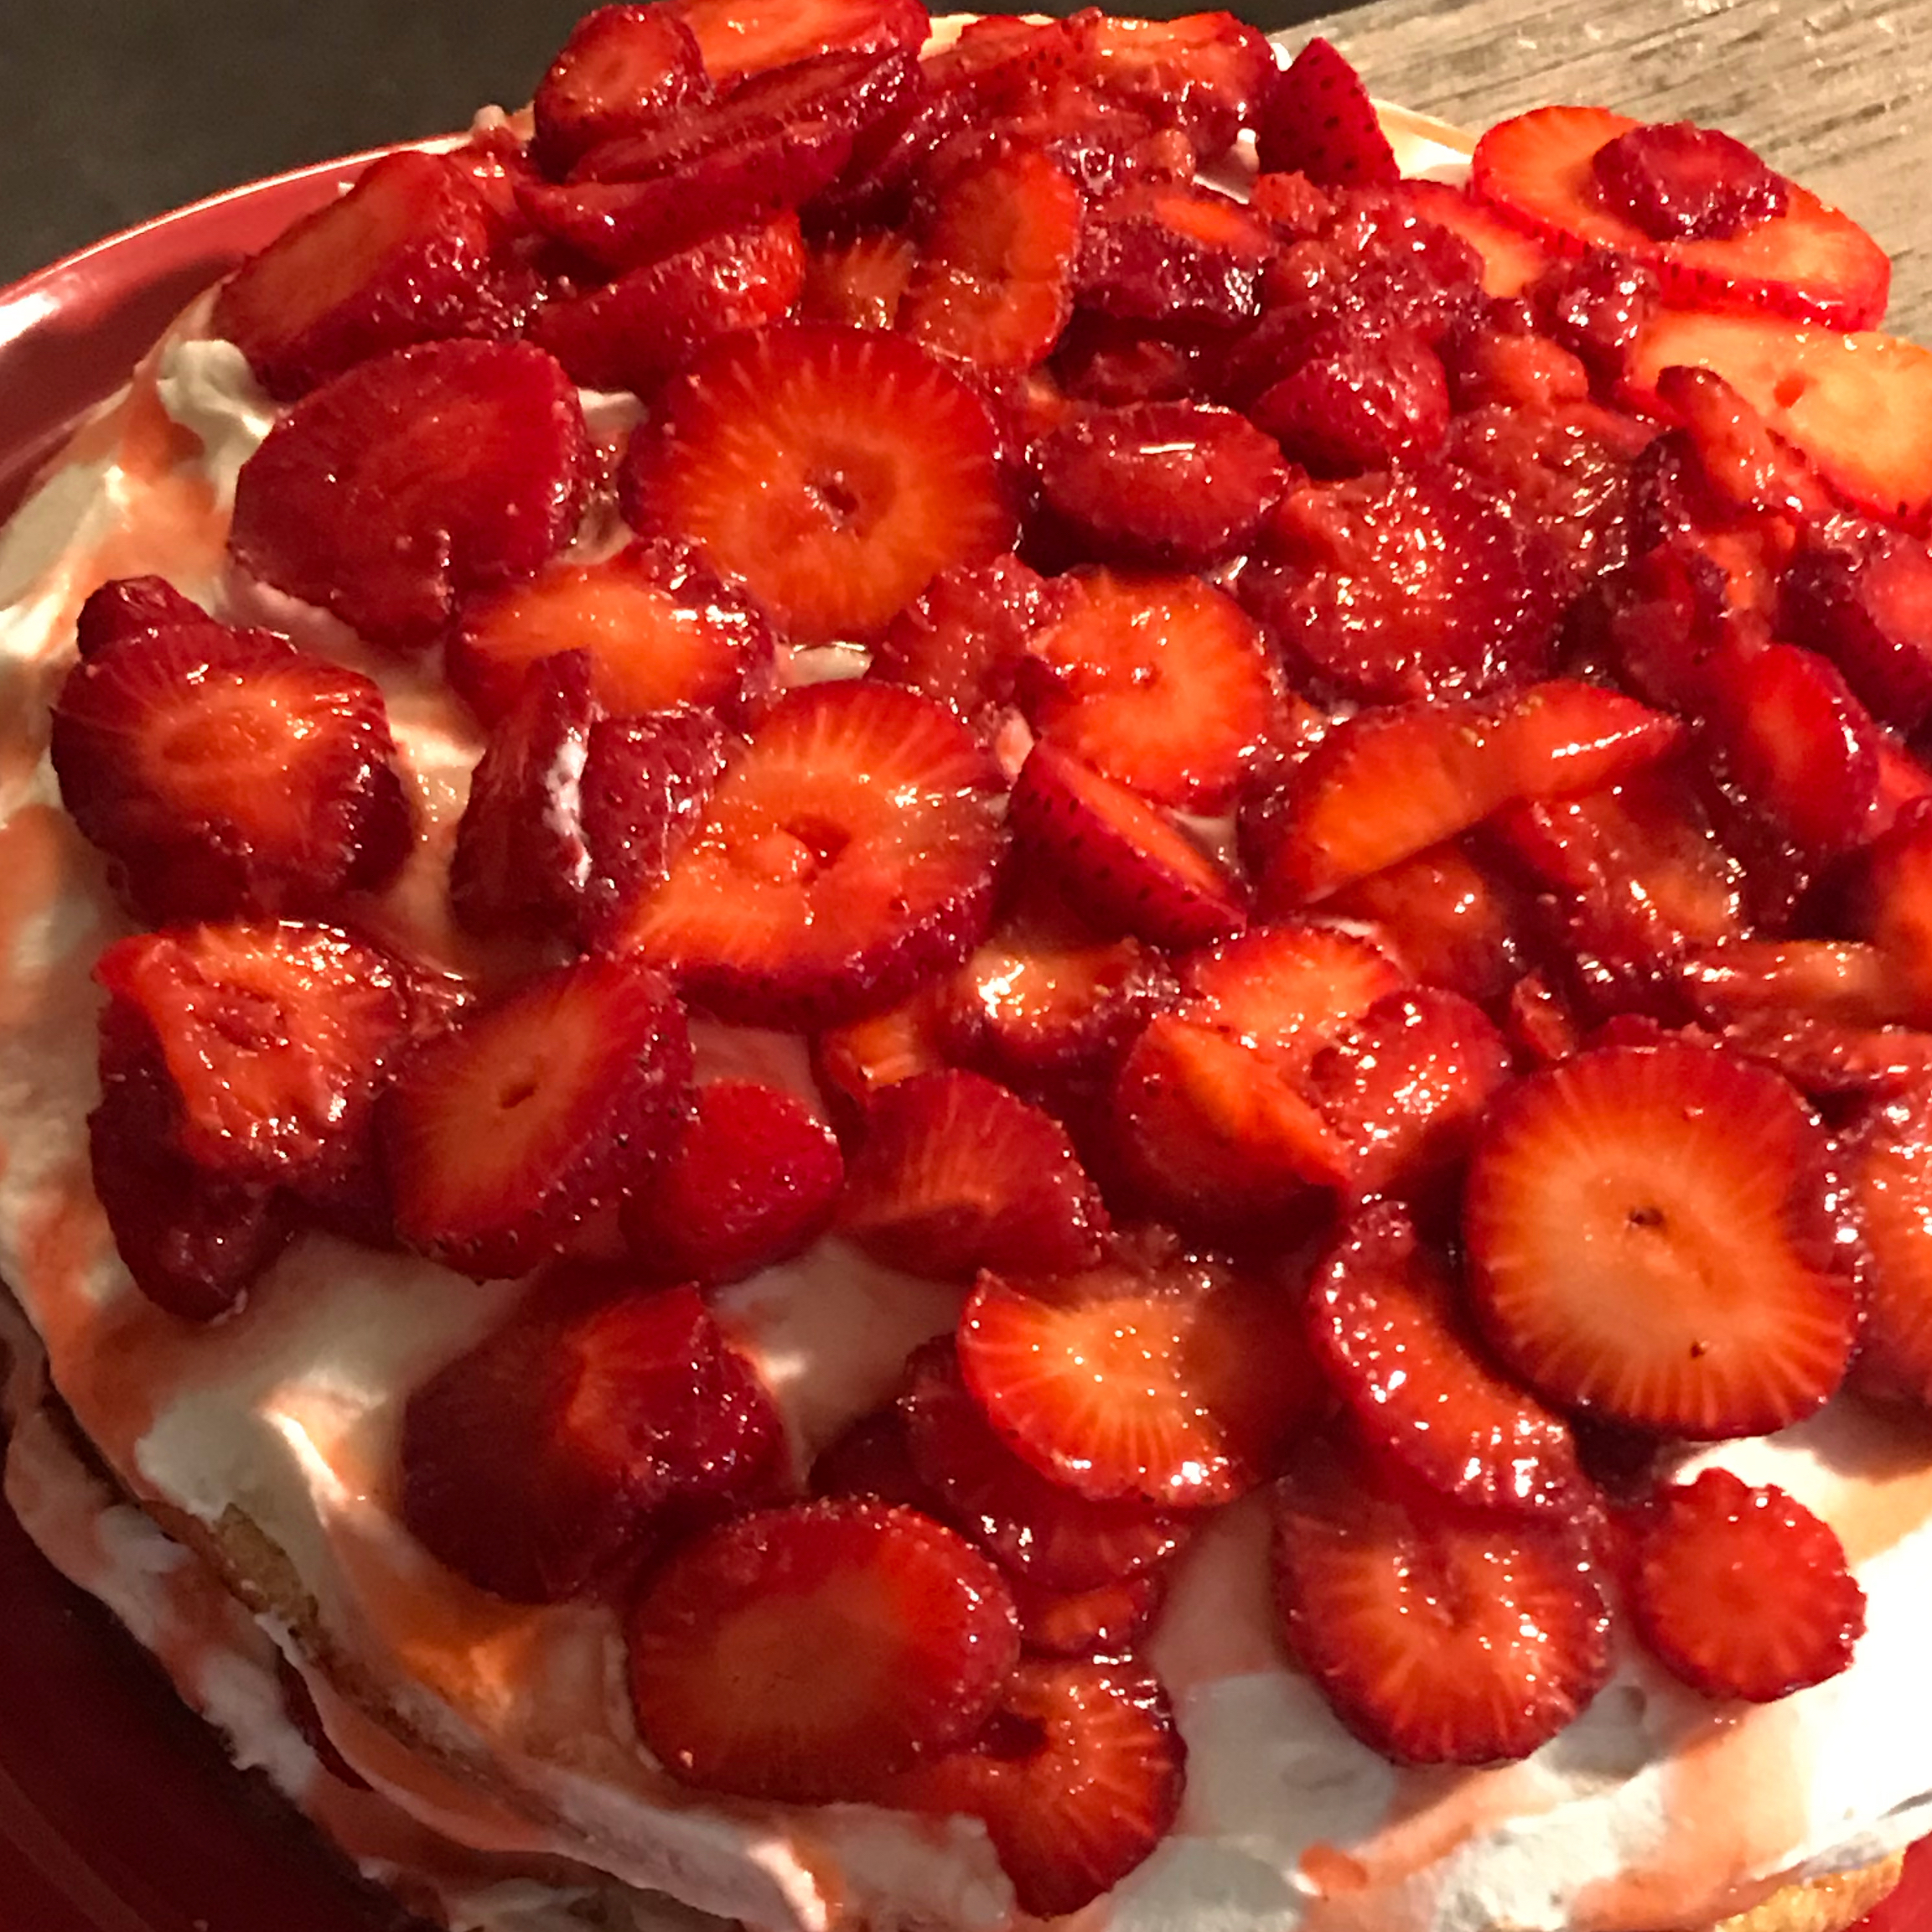 Sensational Strawberry Shortcake 